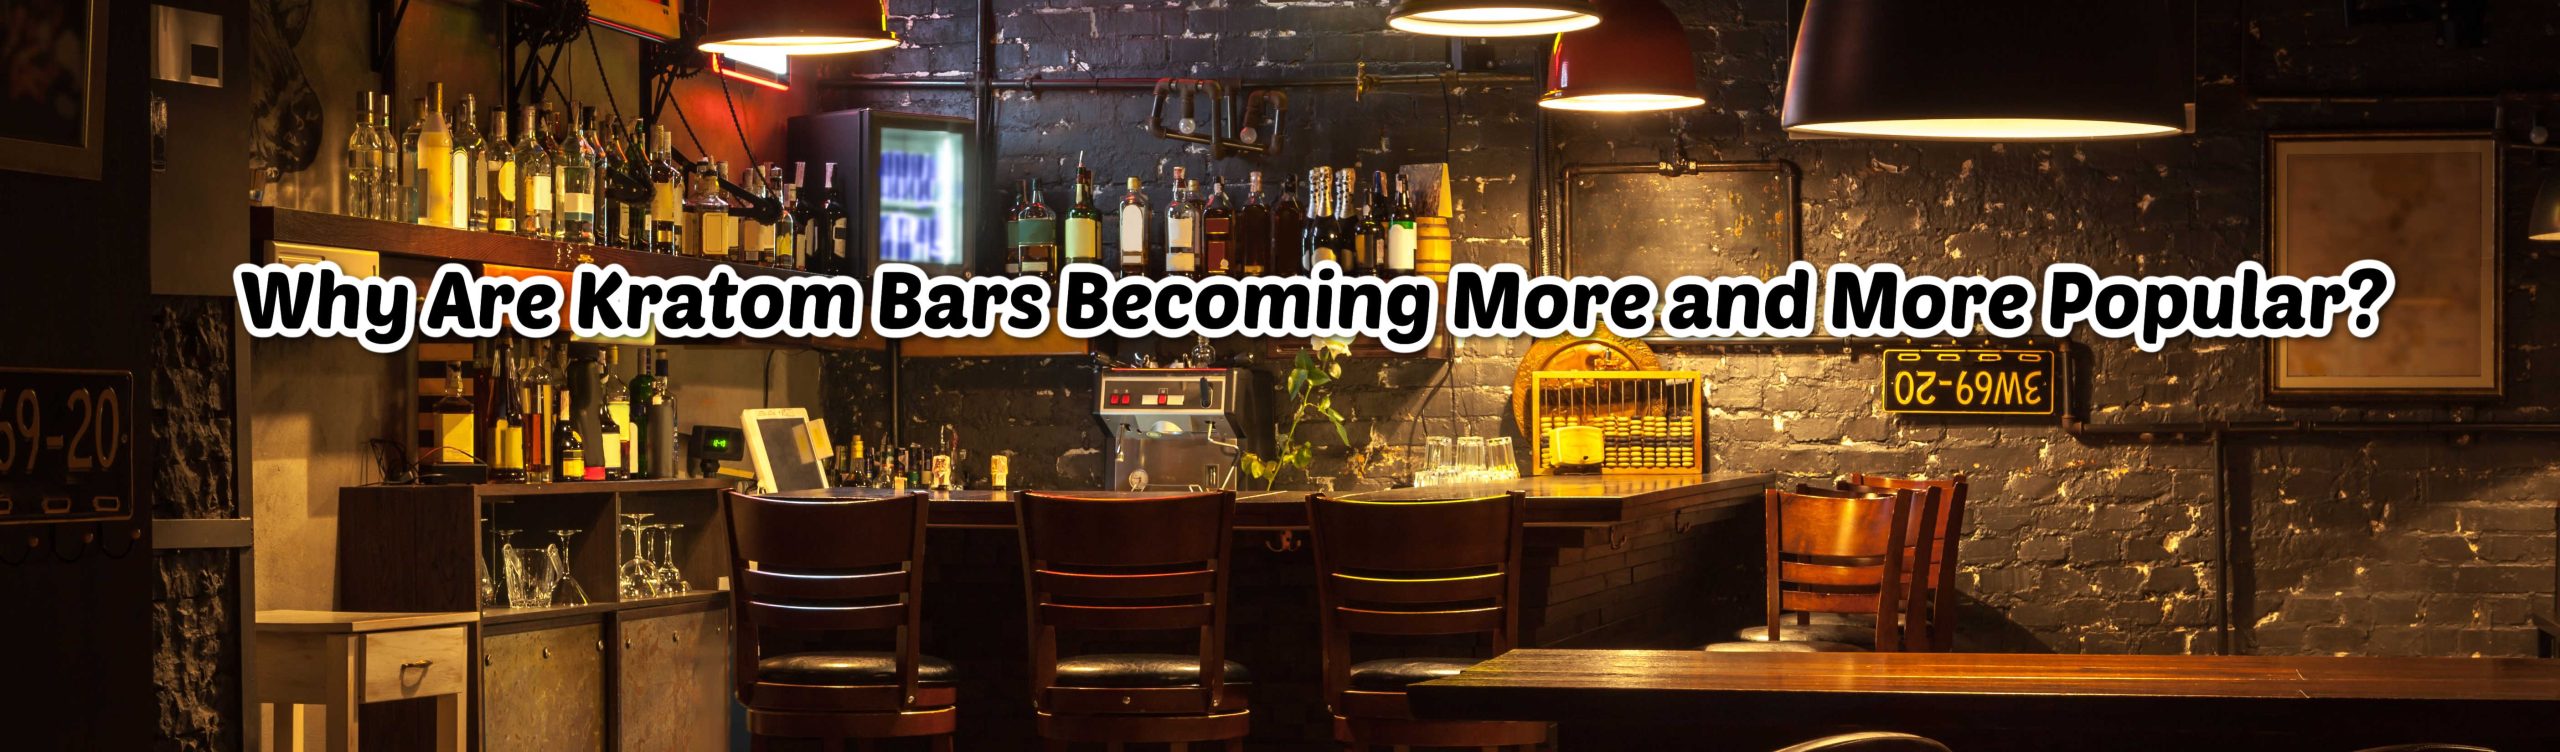 What Are Kratom Bars? (+ List of the Top Kratom Bars in the U.S.)